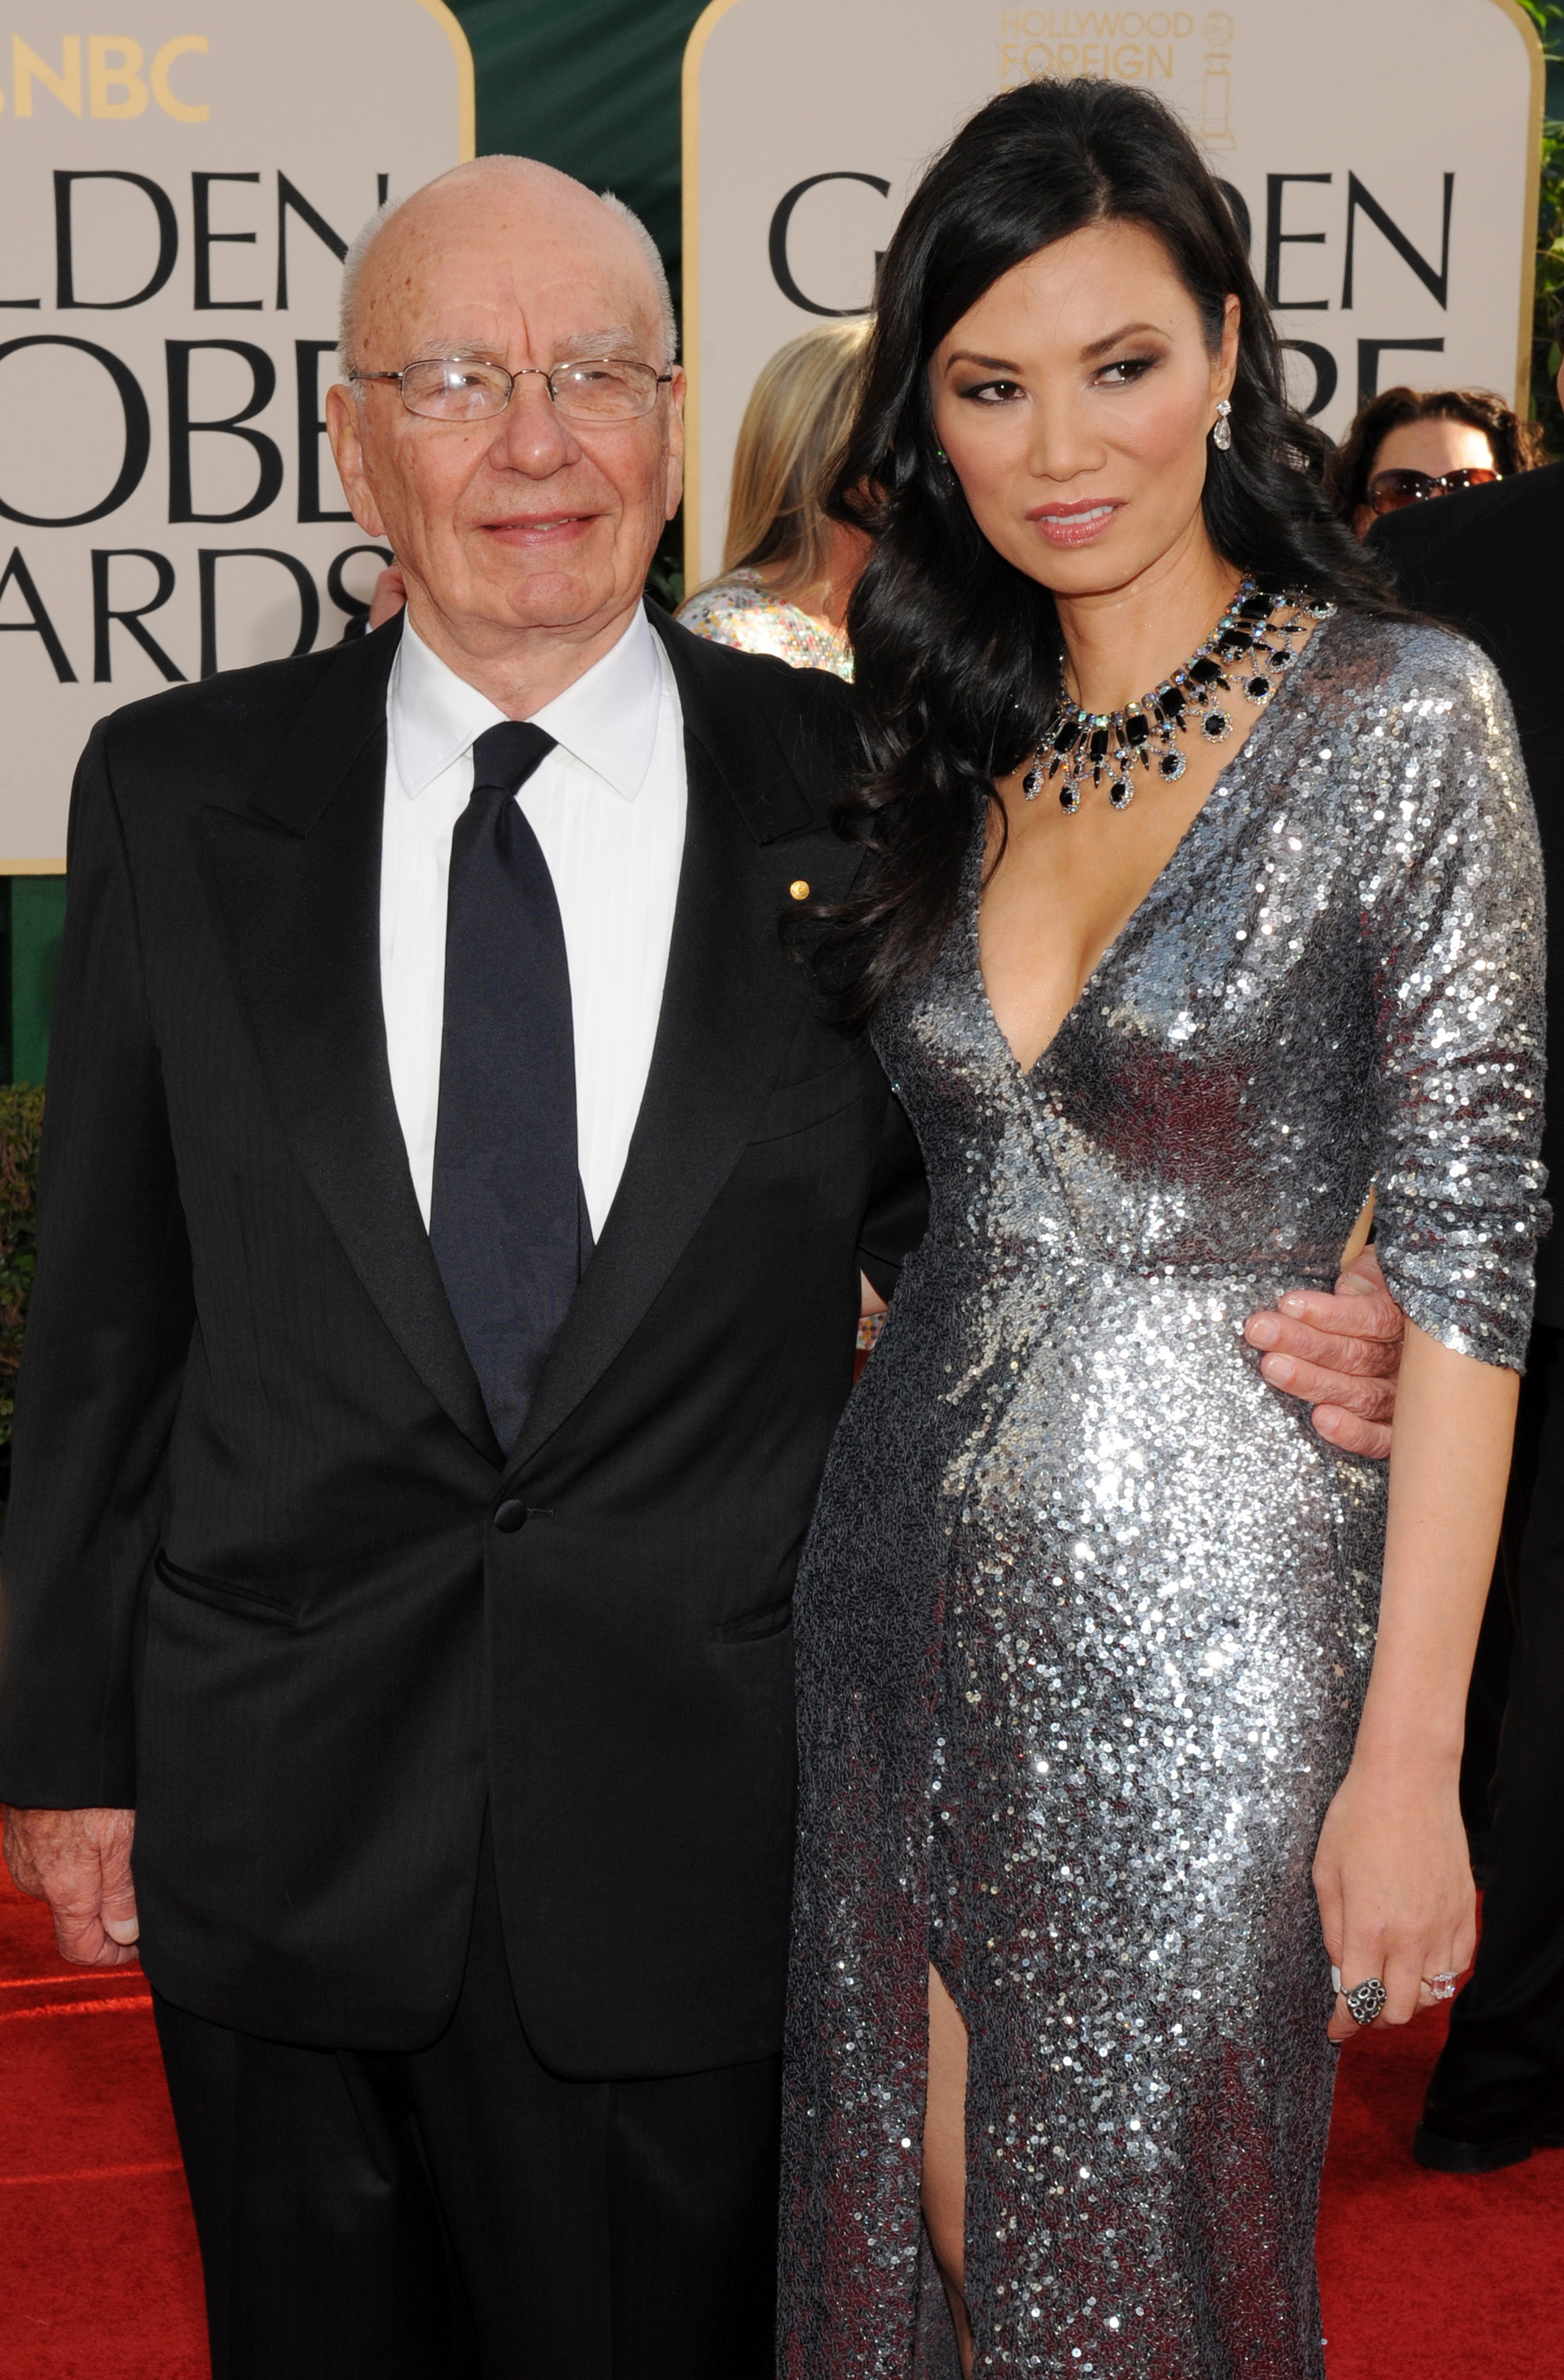 Rupert Murdoch and Wendi Deng Murdoch arrive at the 68th annual Golden Globe Awards in Beverly Hills, California